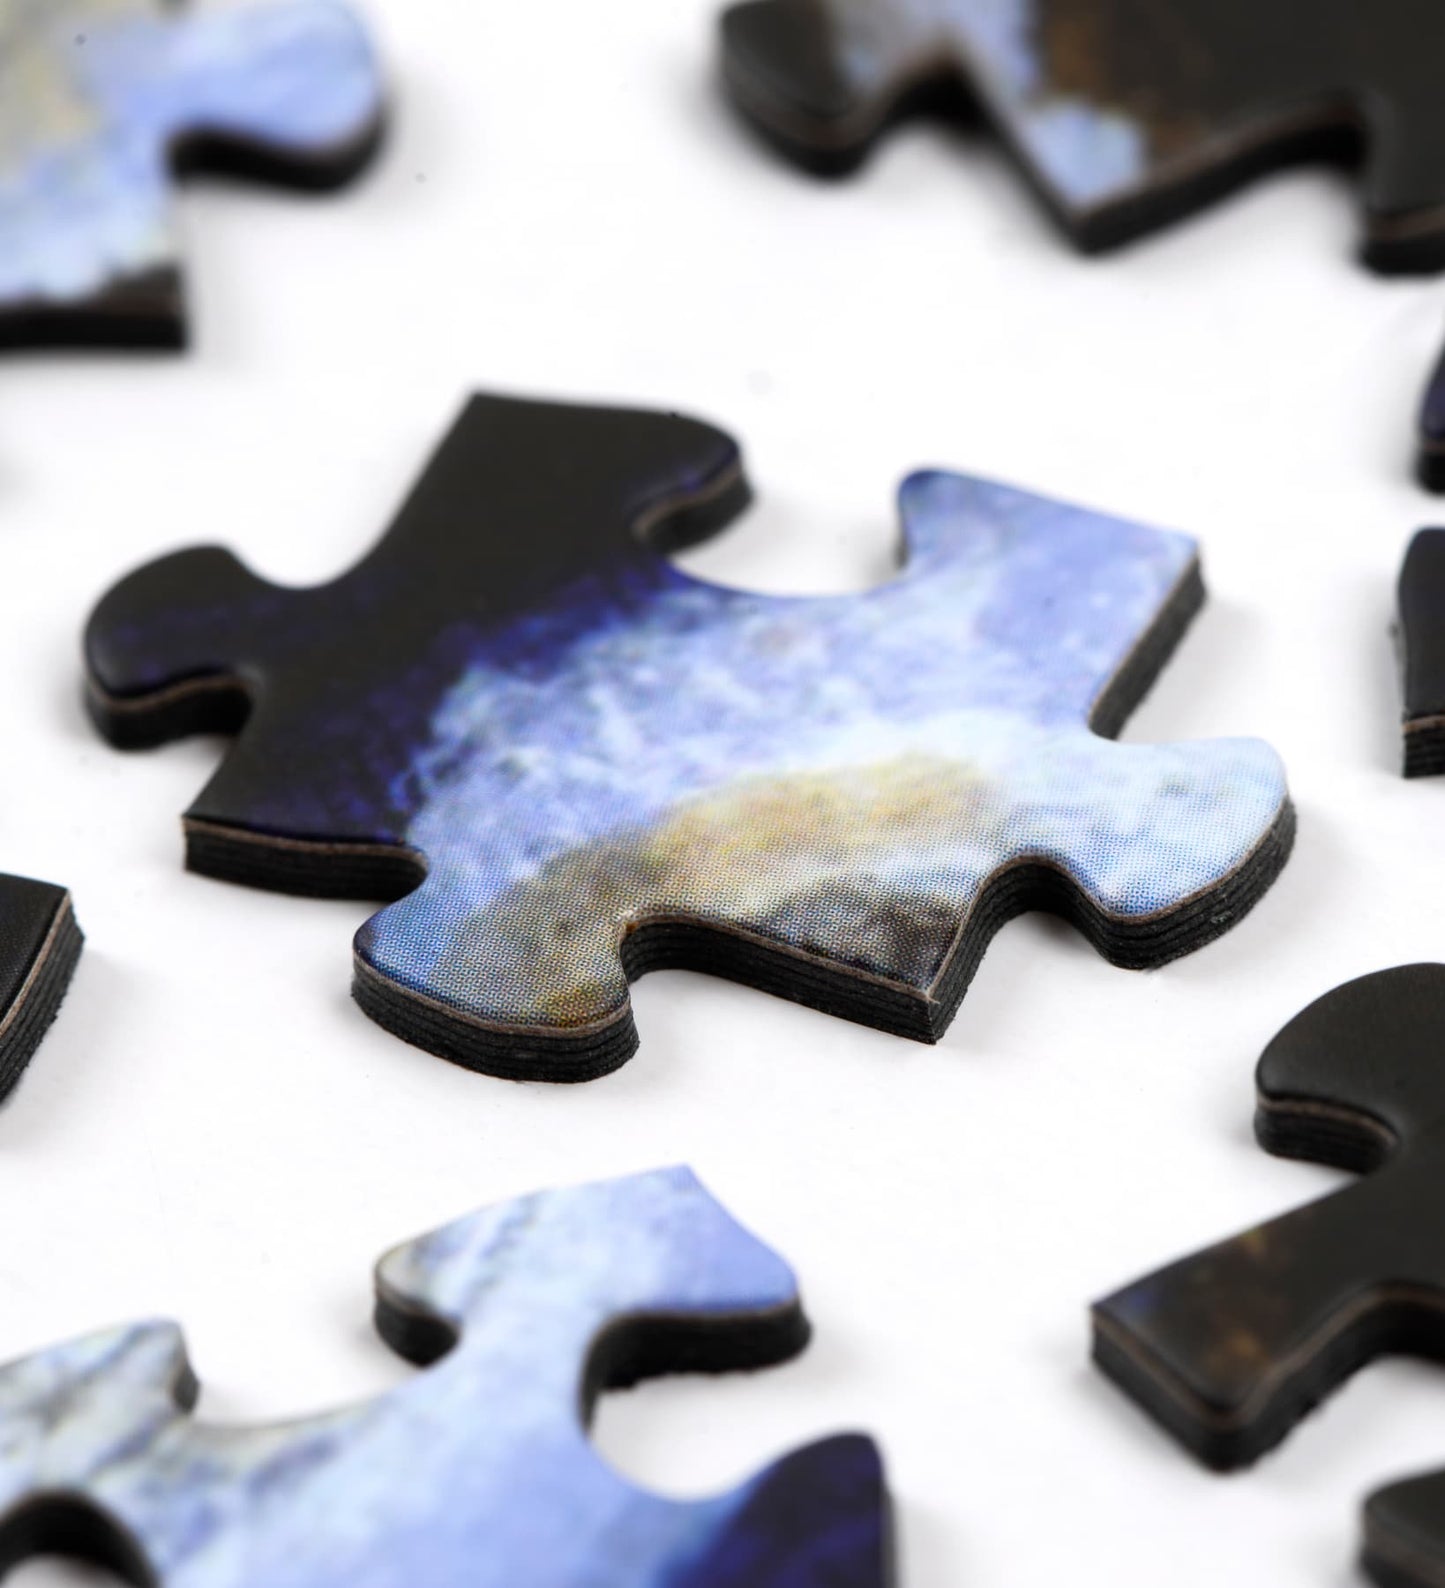 Asteroids x Blue Kazoo Jigsaw Puzzle